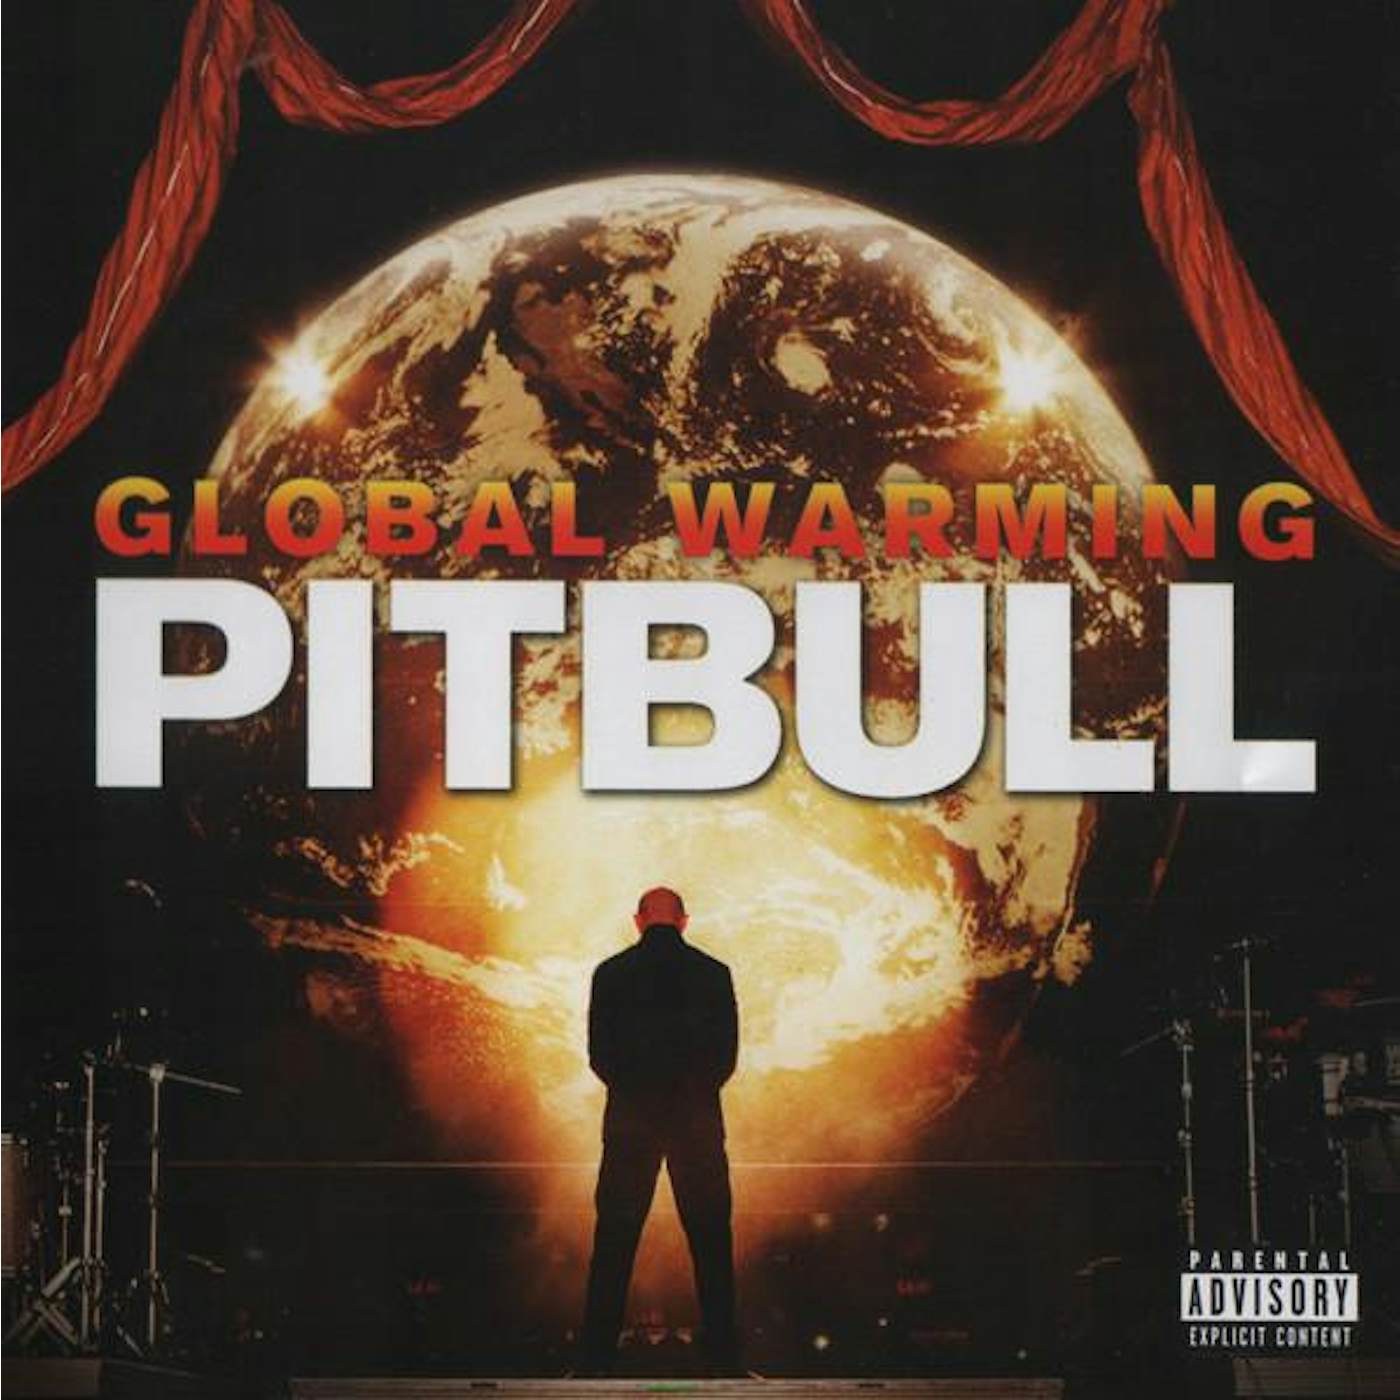 Pitbull GLOBAL WARMING CD